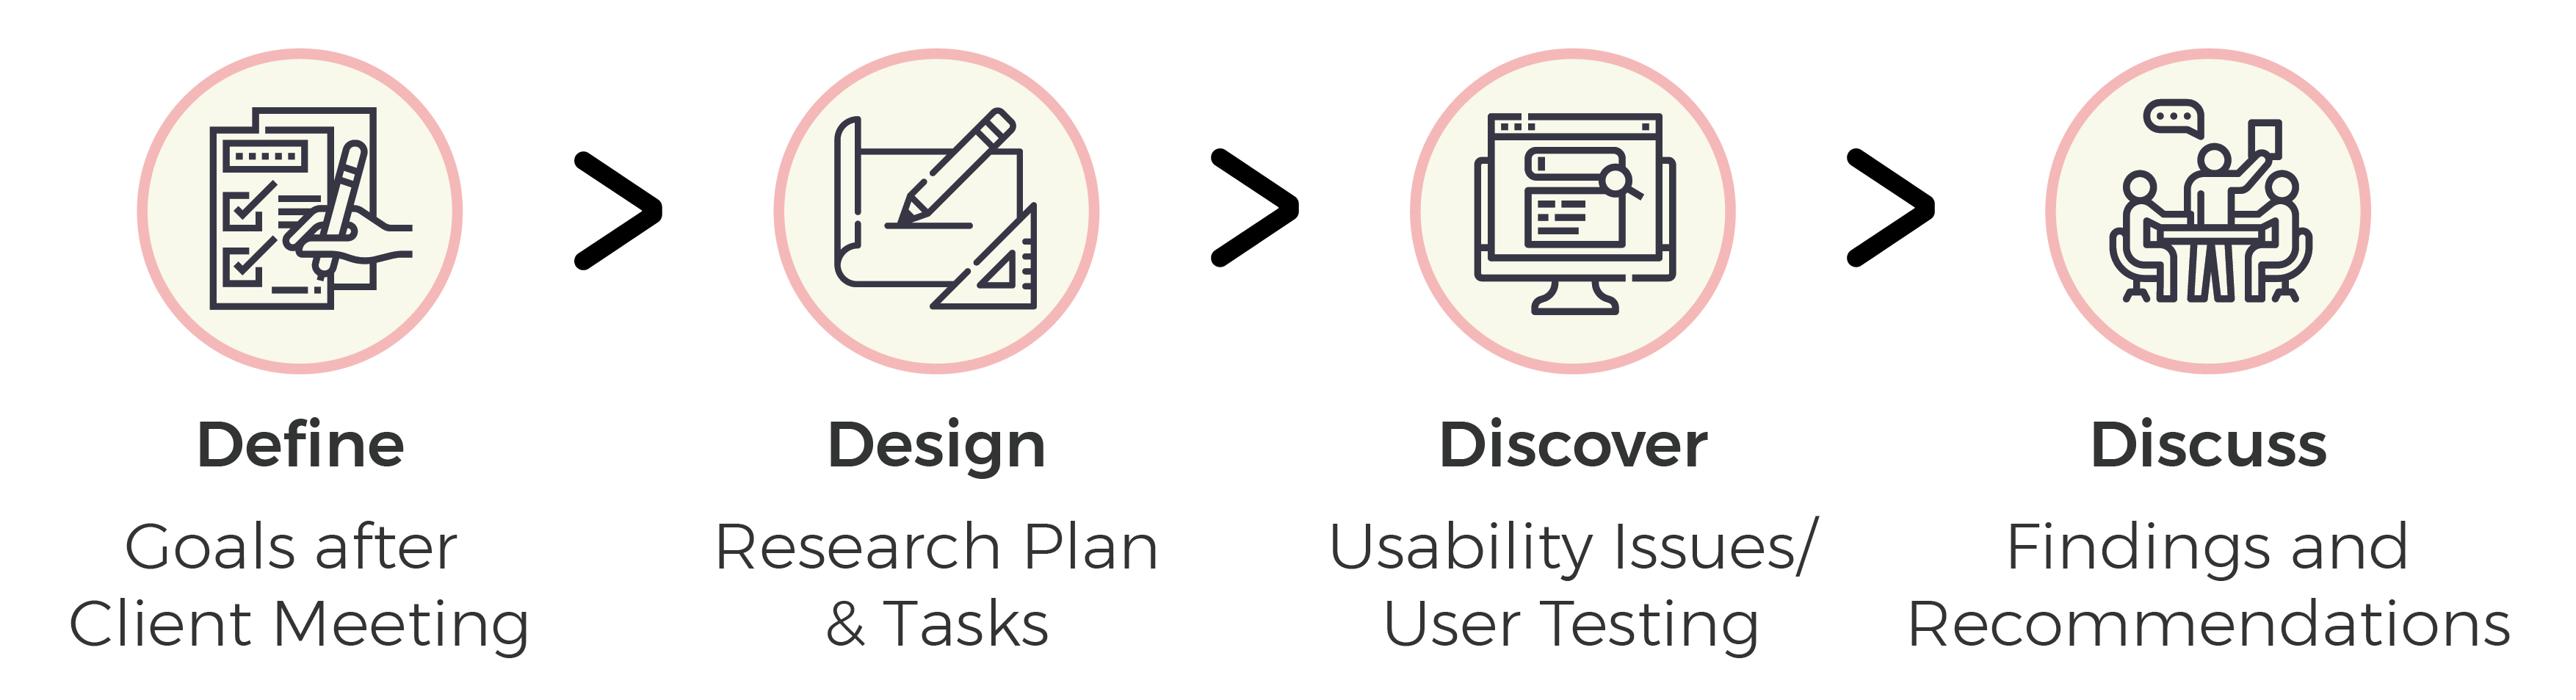 process followed is define design discover discuss